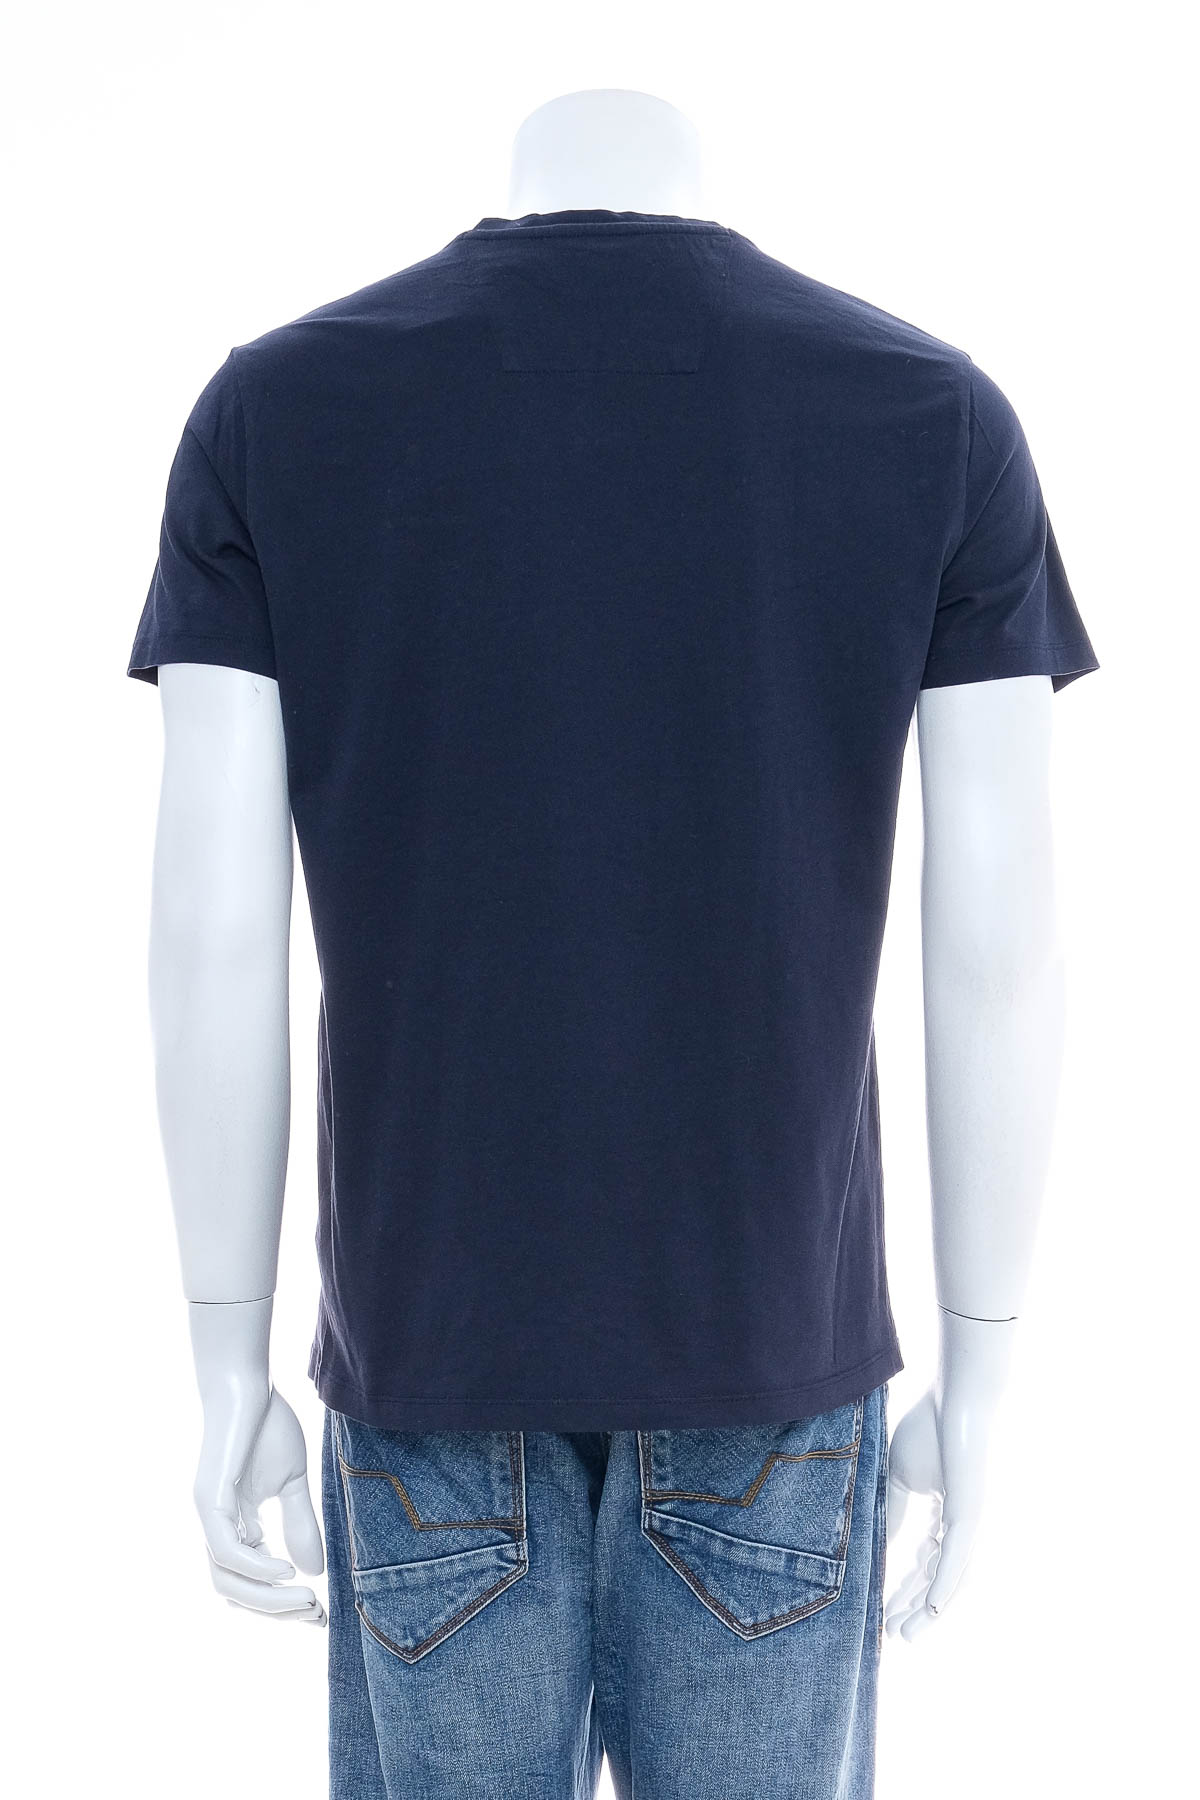 Men's T-shirt - Calvin Klein - 1